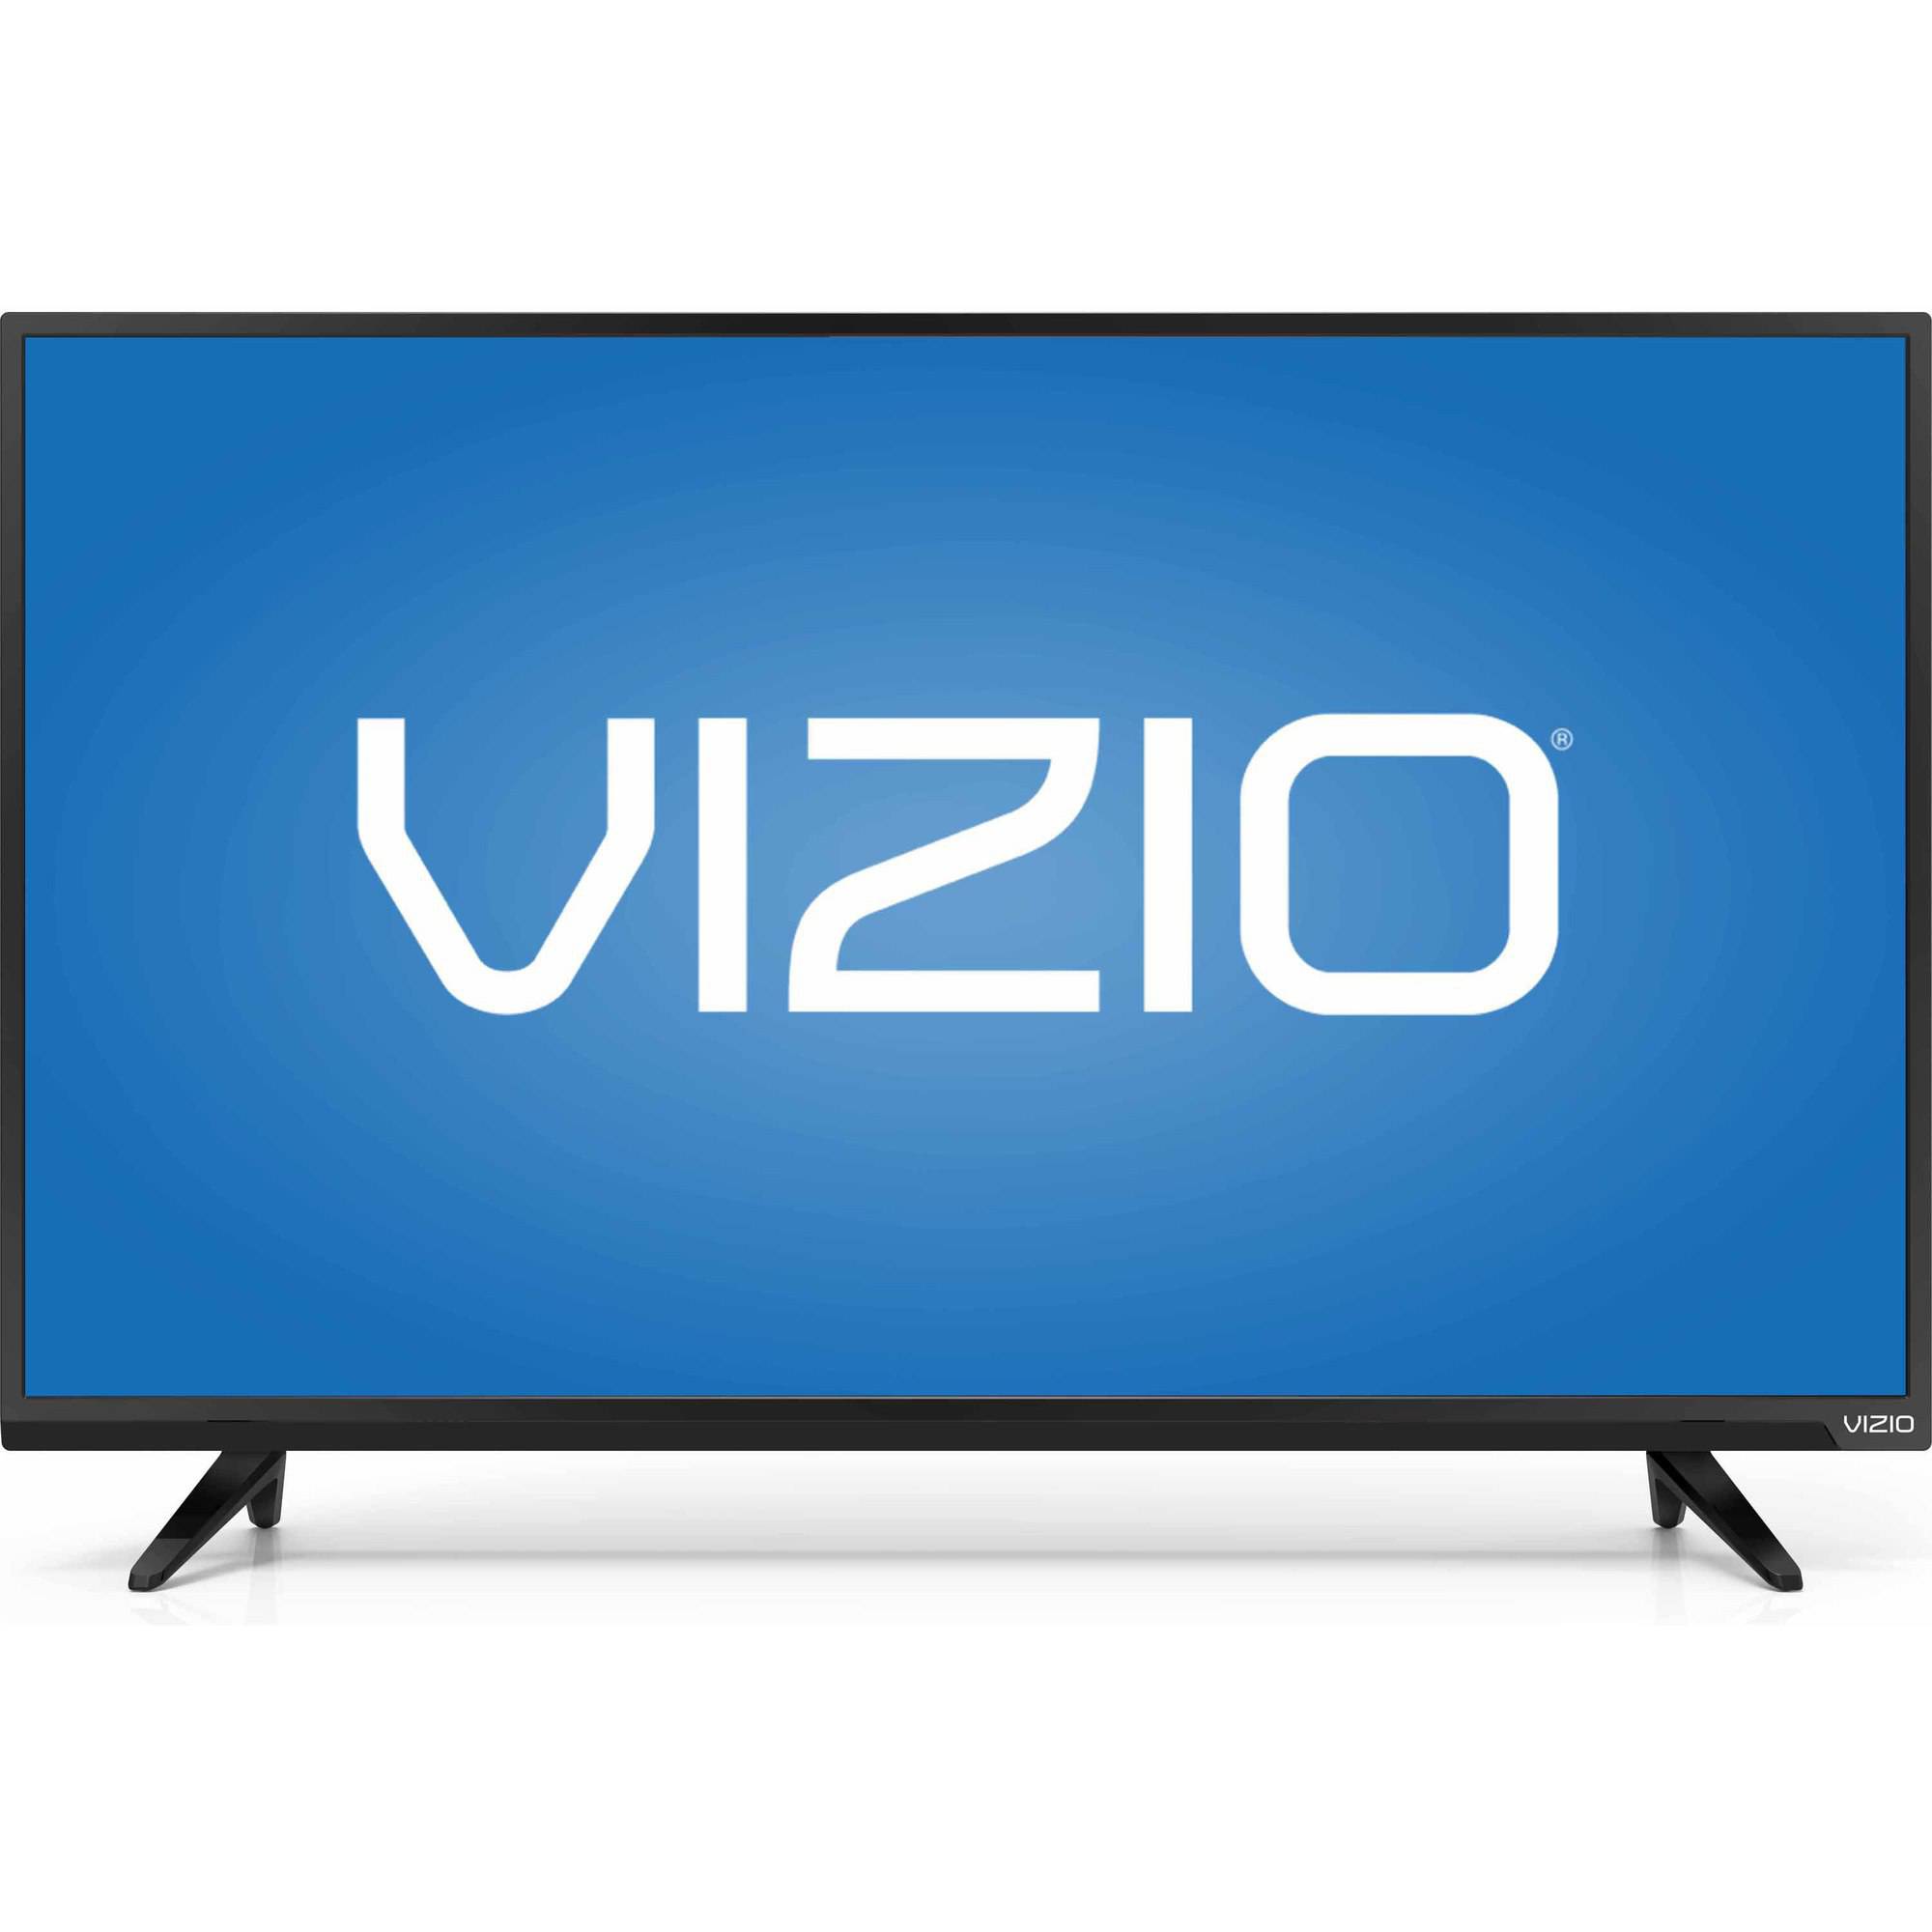 Refurbished VIZIO 39" Class HD (720P) LED TV (D39h-C0) - image 1 of 5